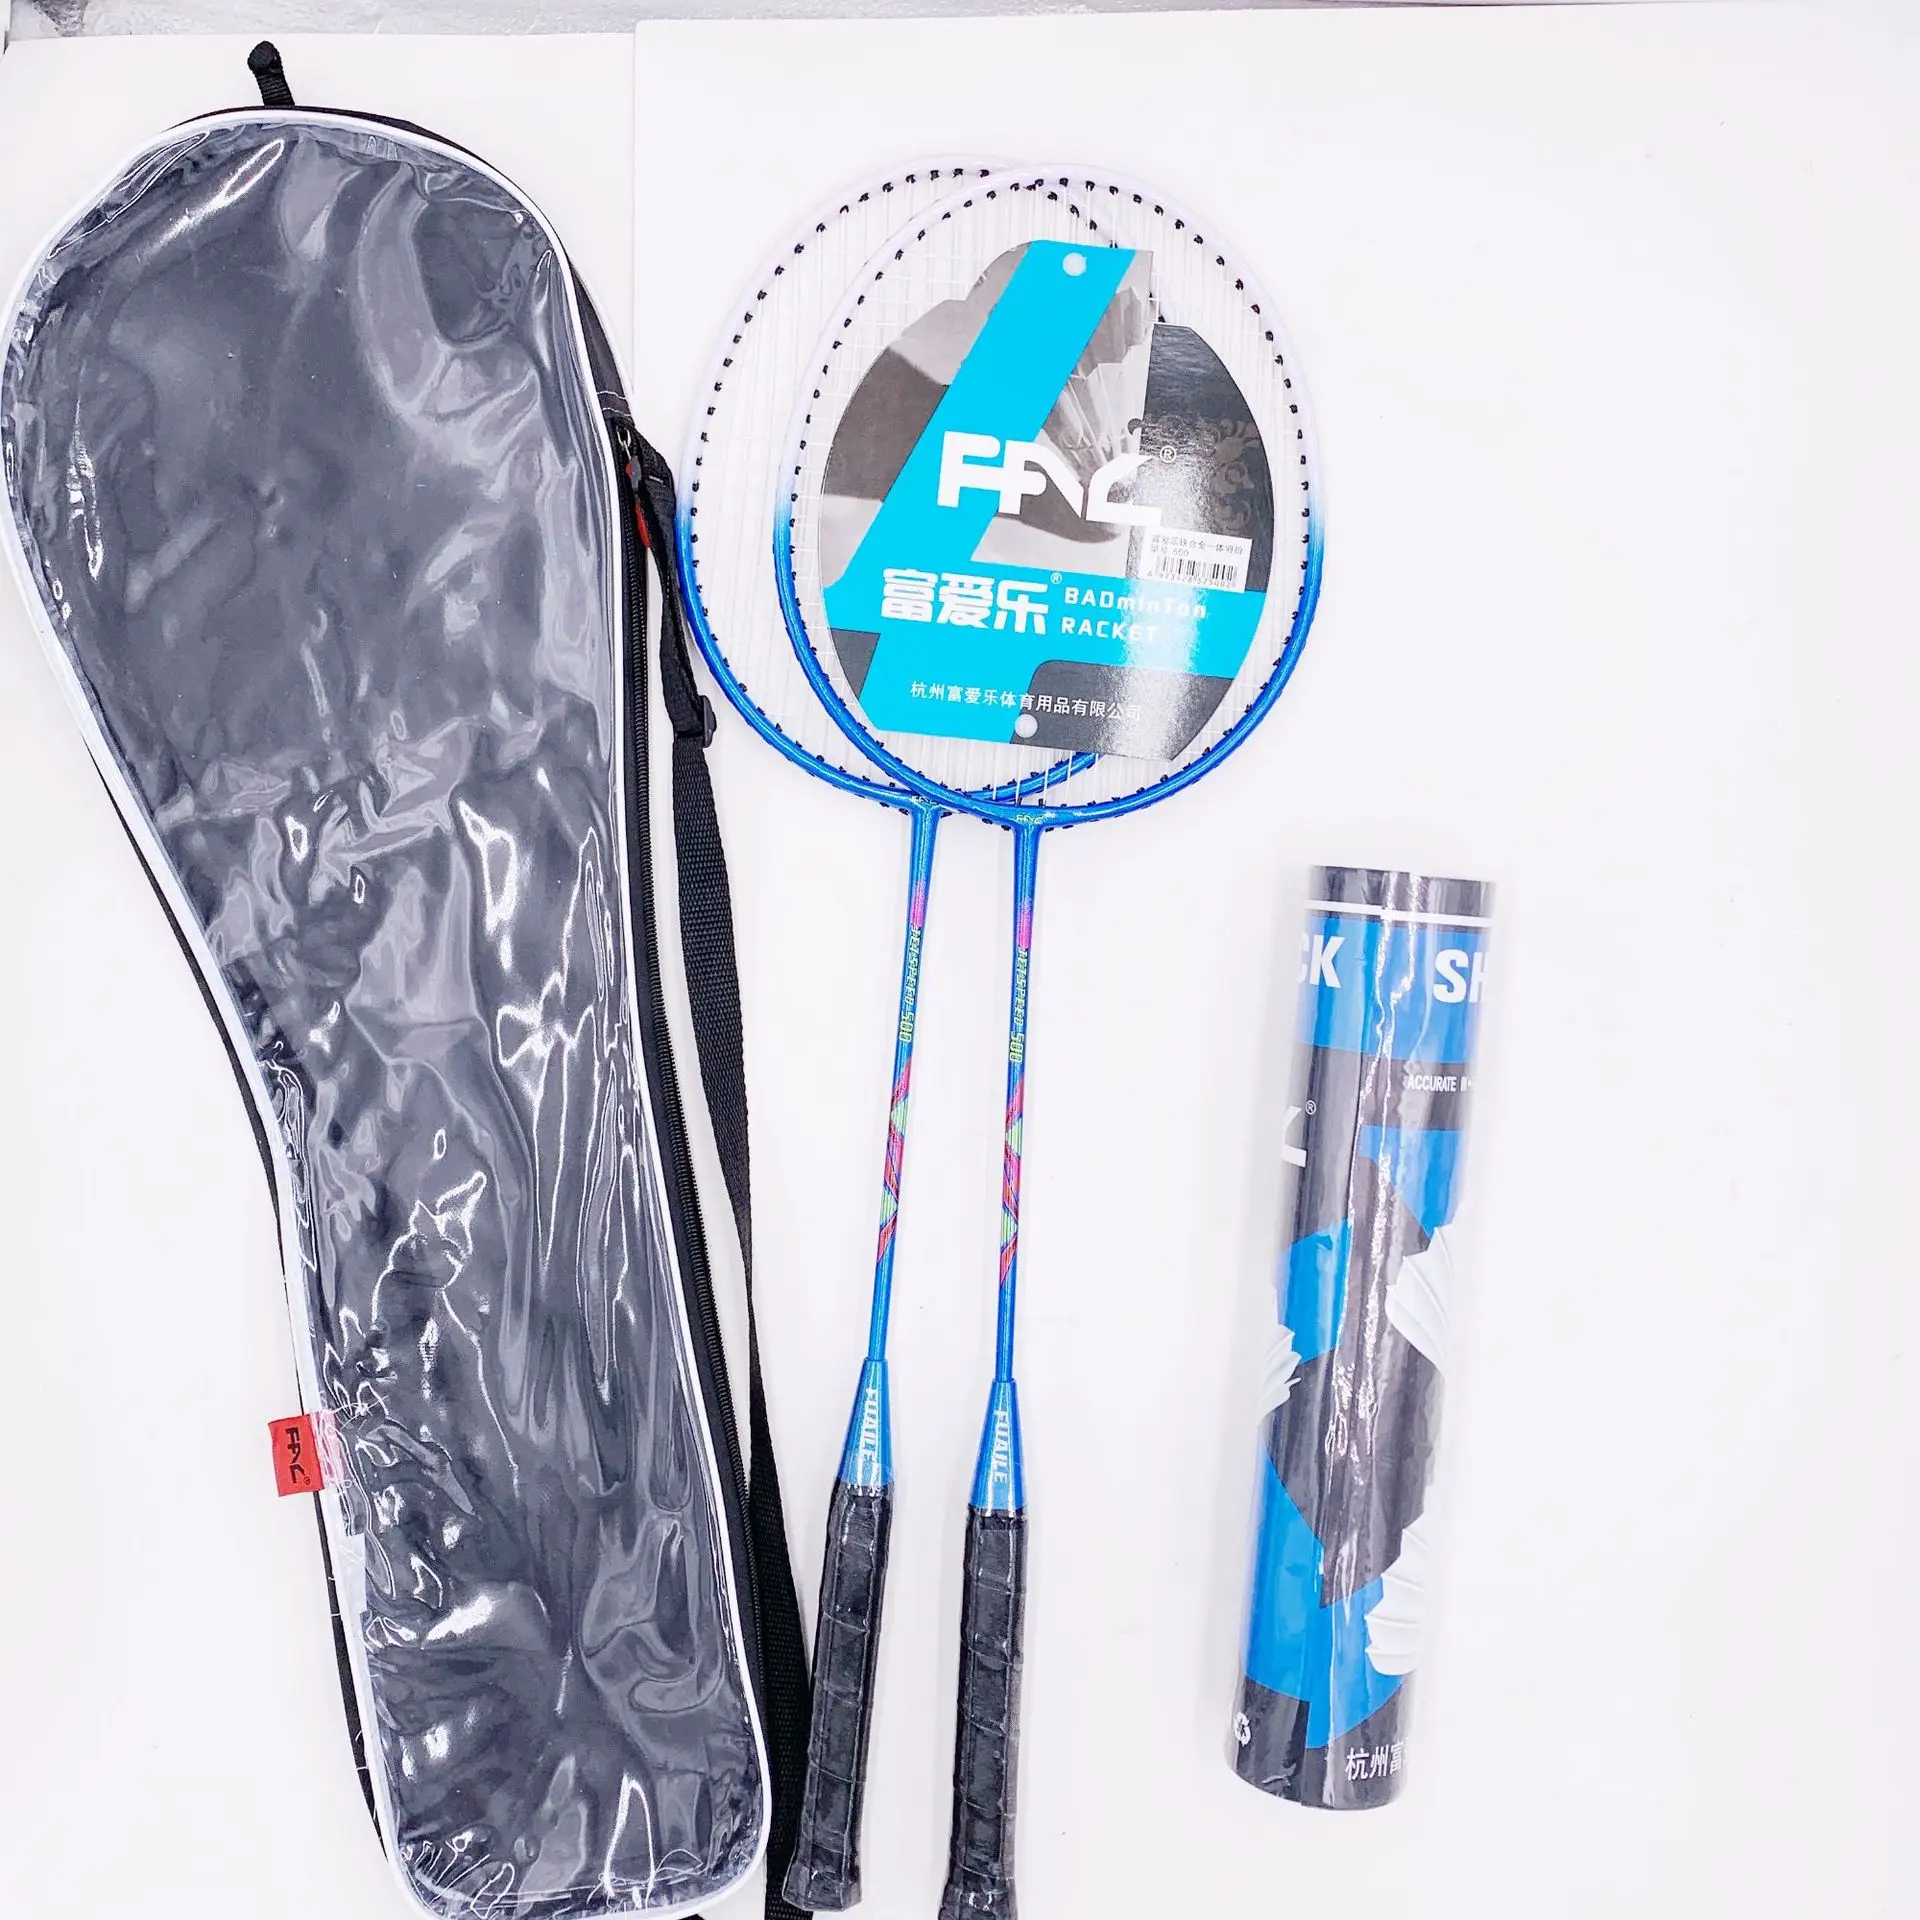 

500 badminton racket iron alloy send badminton student badminton racquet set, Pink, blue